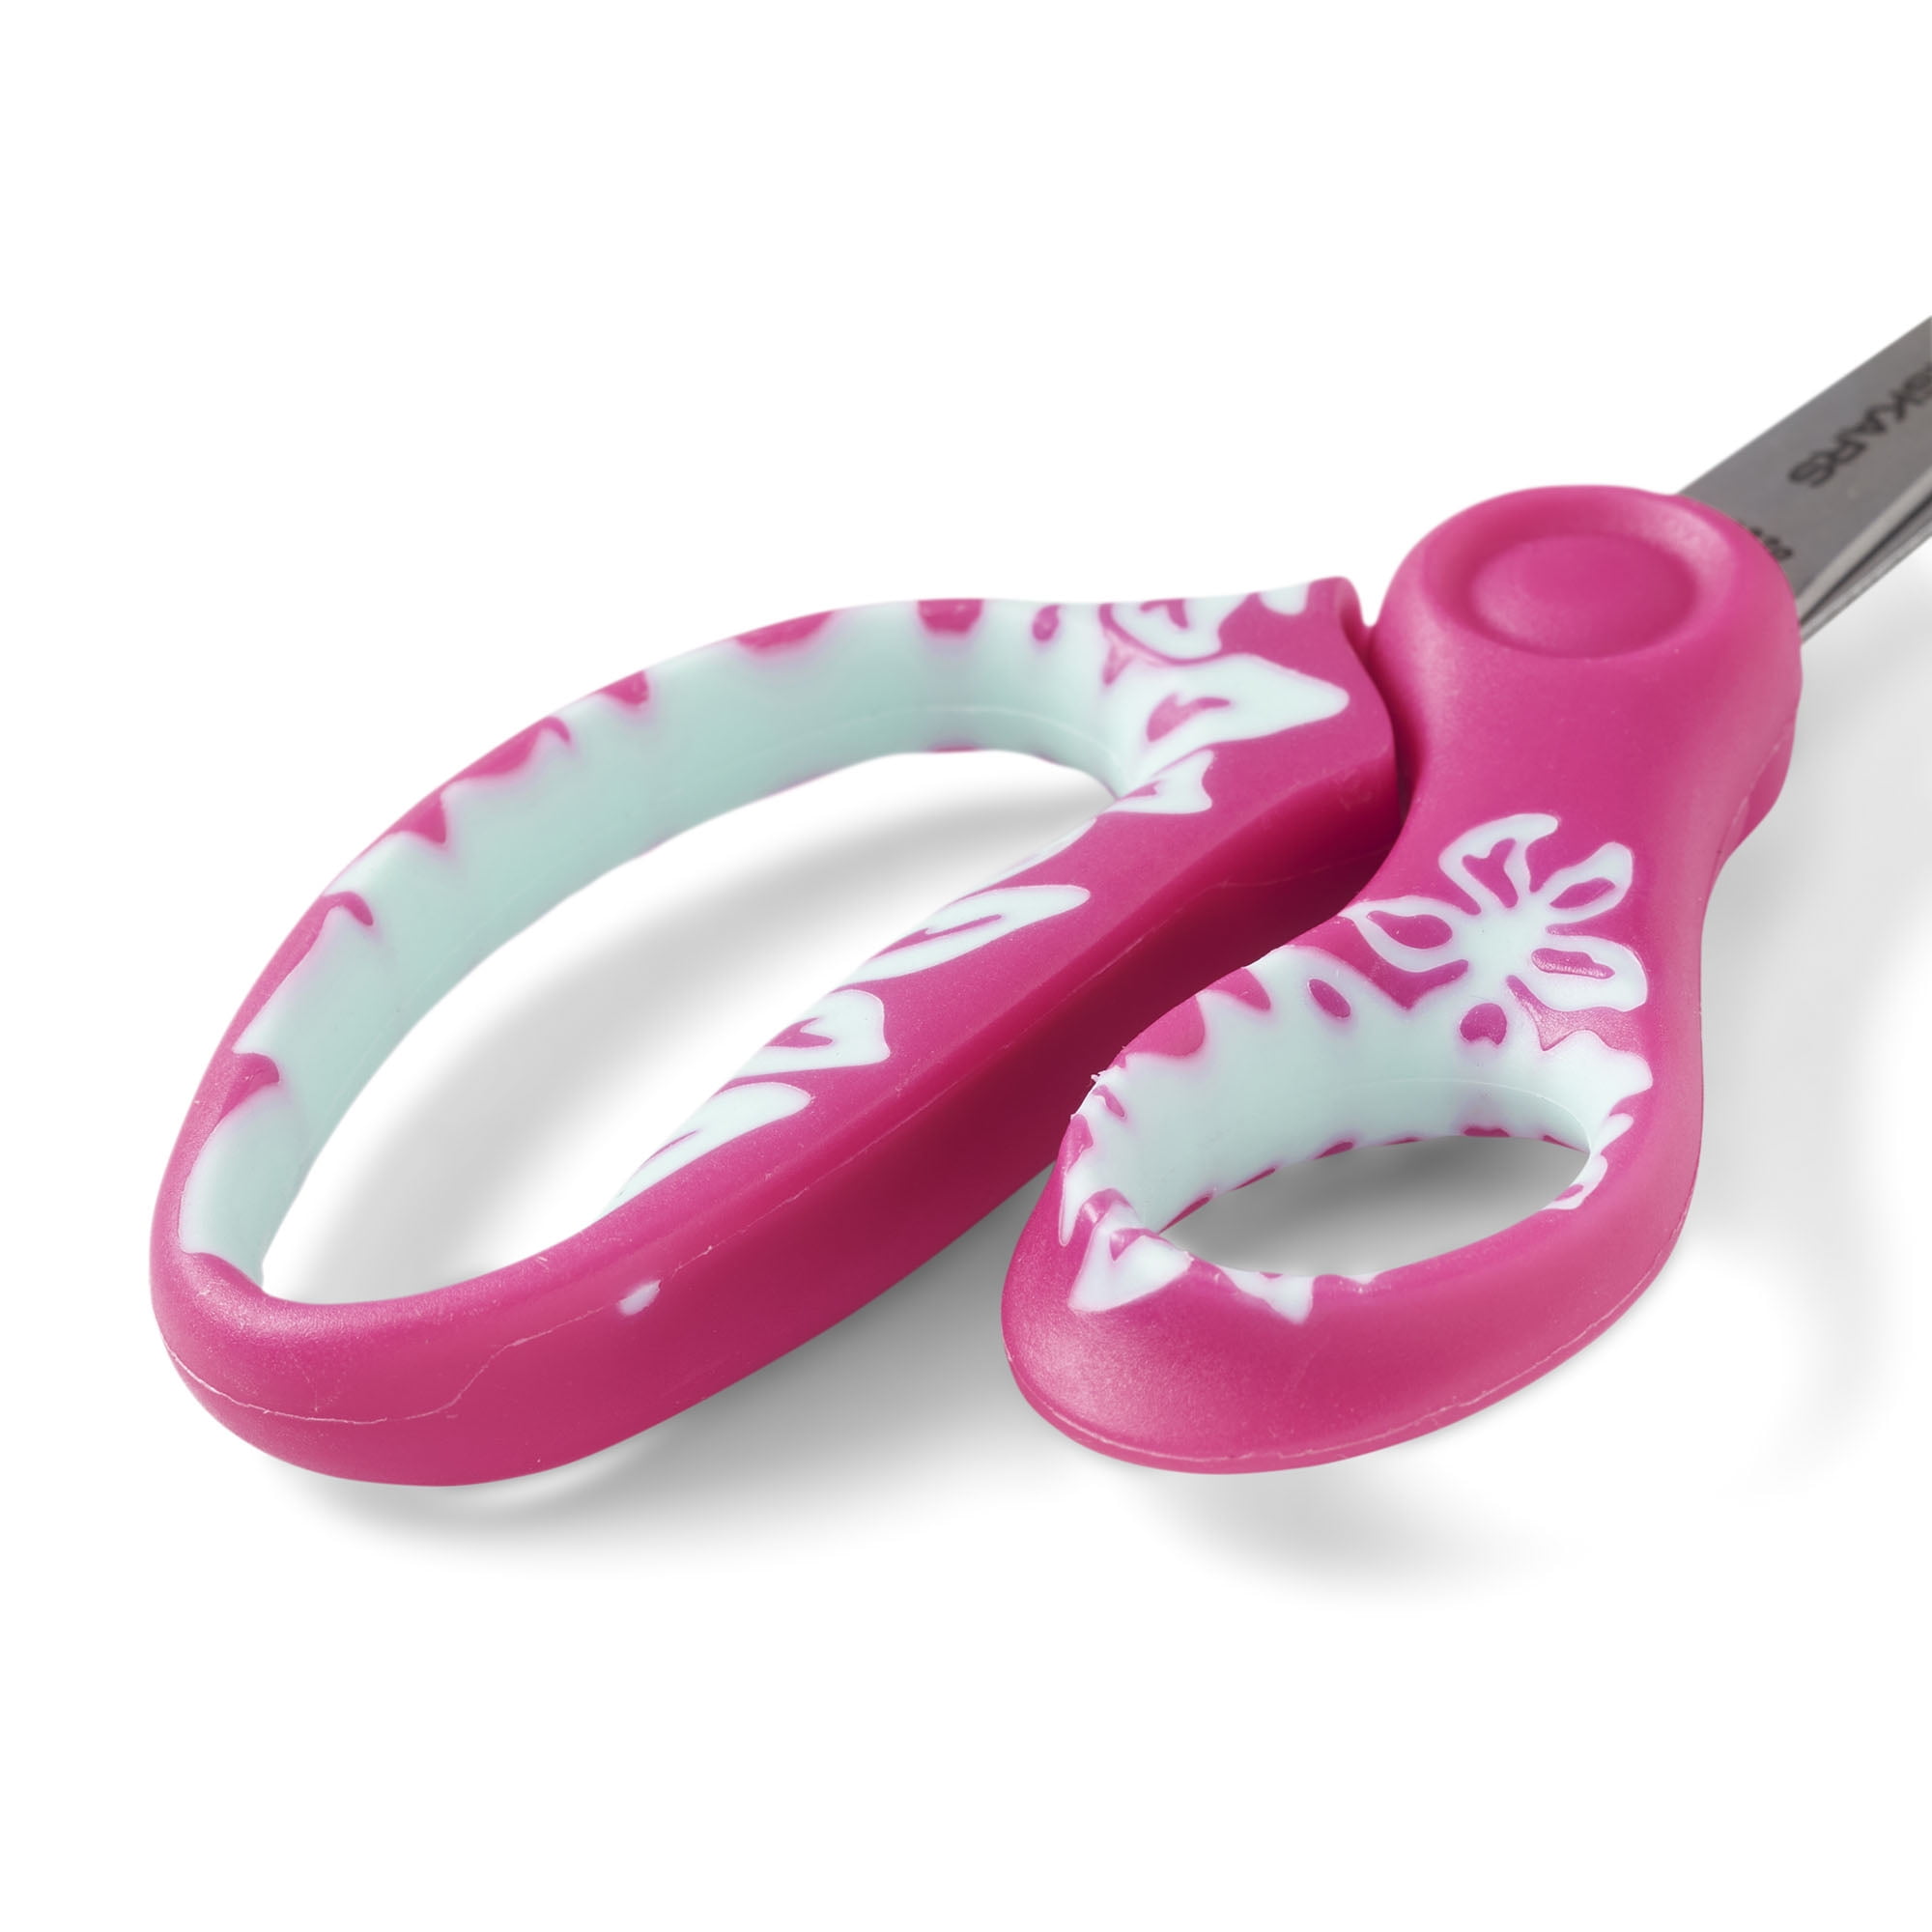 Fiskars Preschool Training Scissors - Pink/Purp